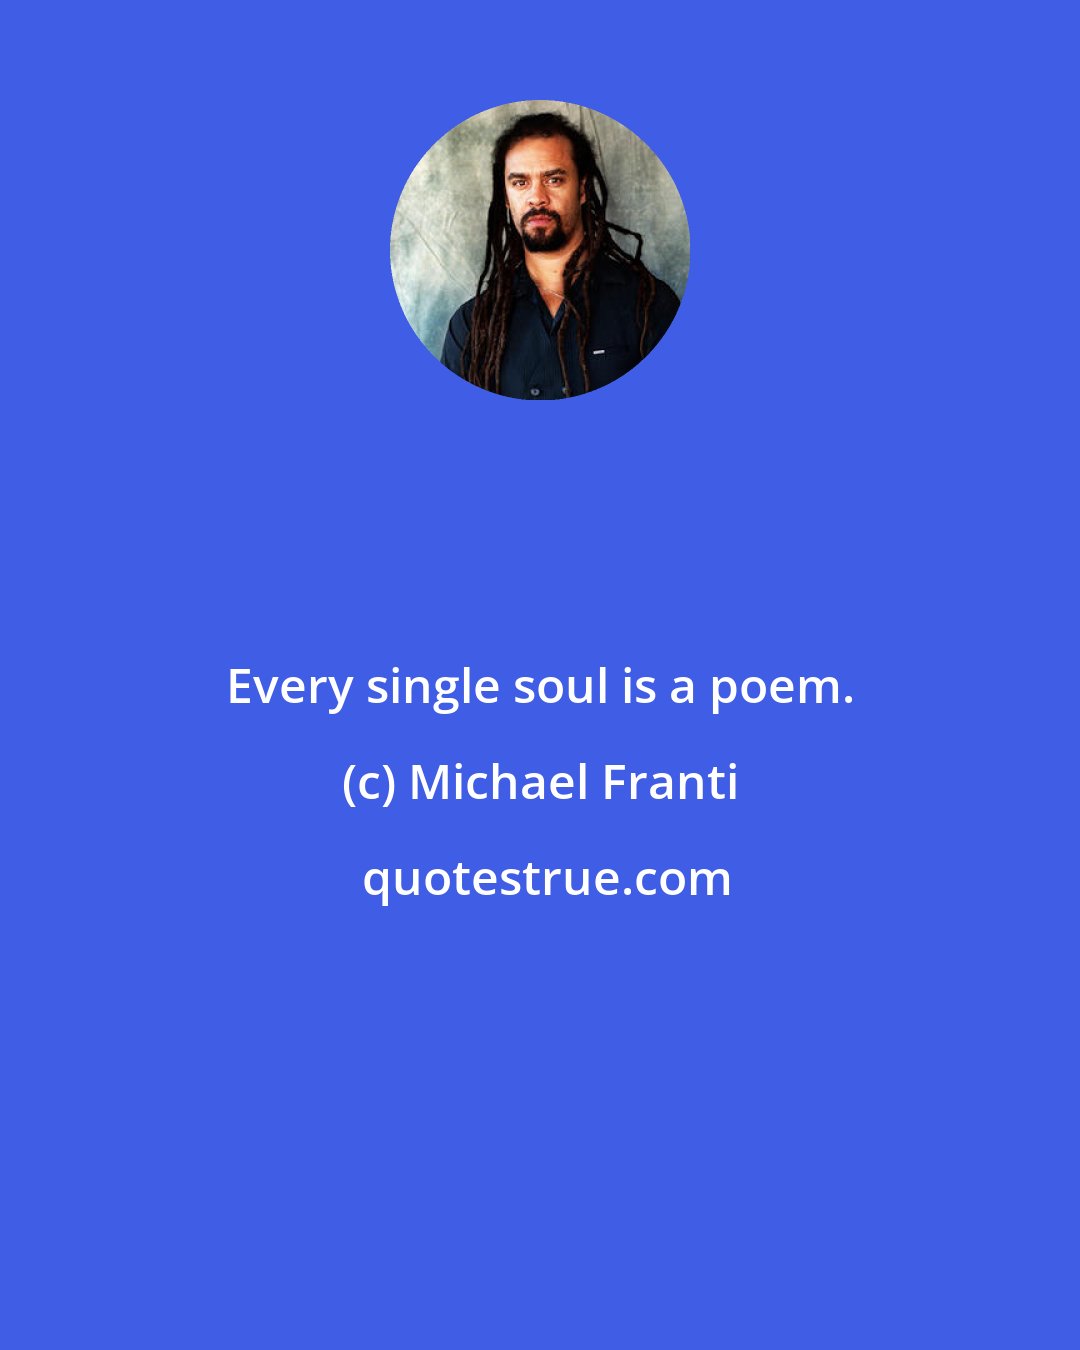 Michael Franti: Every single soul is a poem.